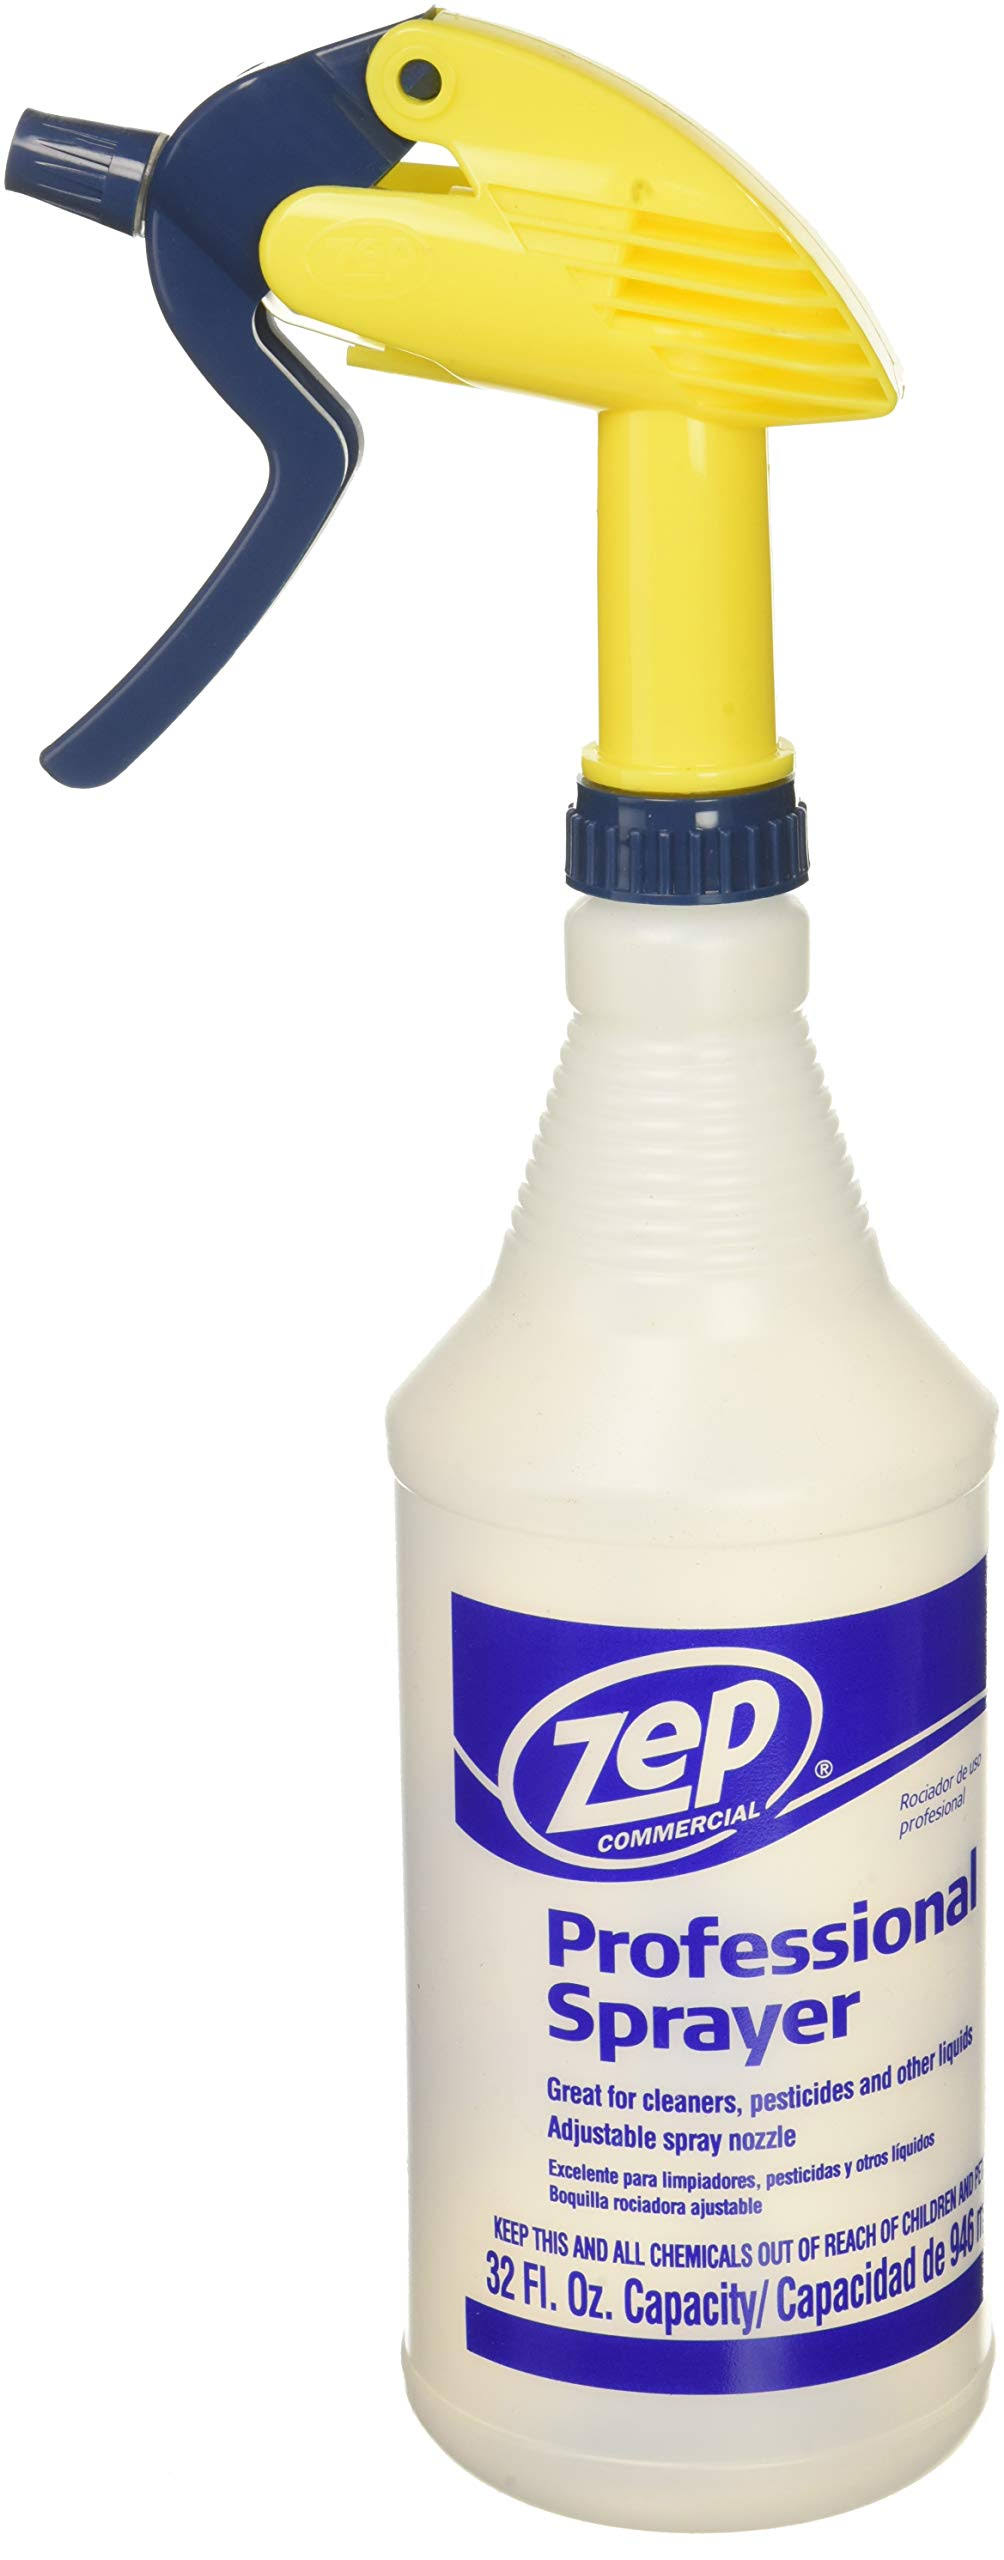 Zep Commercial Professional Sprayer - 32oz